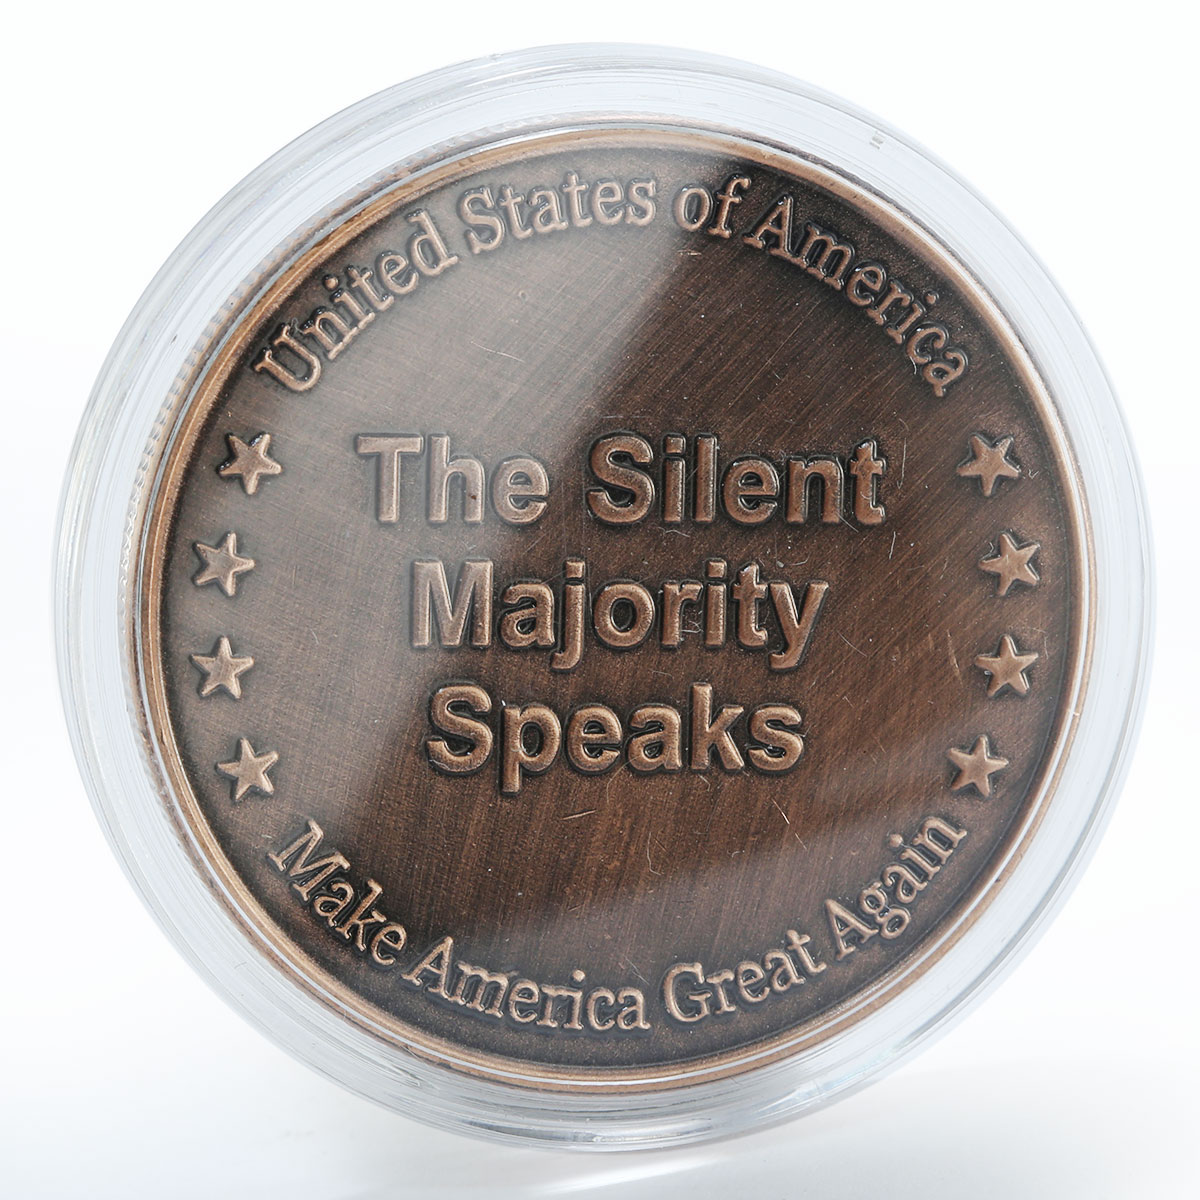 USA Donald Trump Manhattan The Silent Majority Speaks token